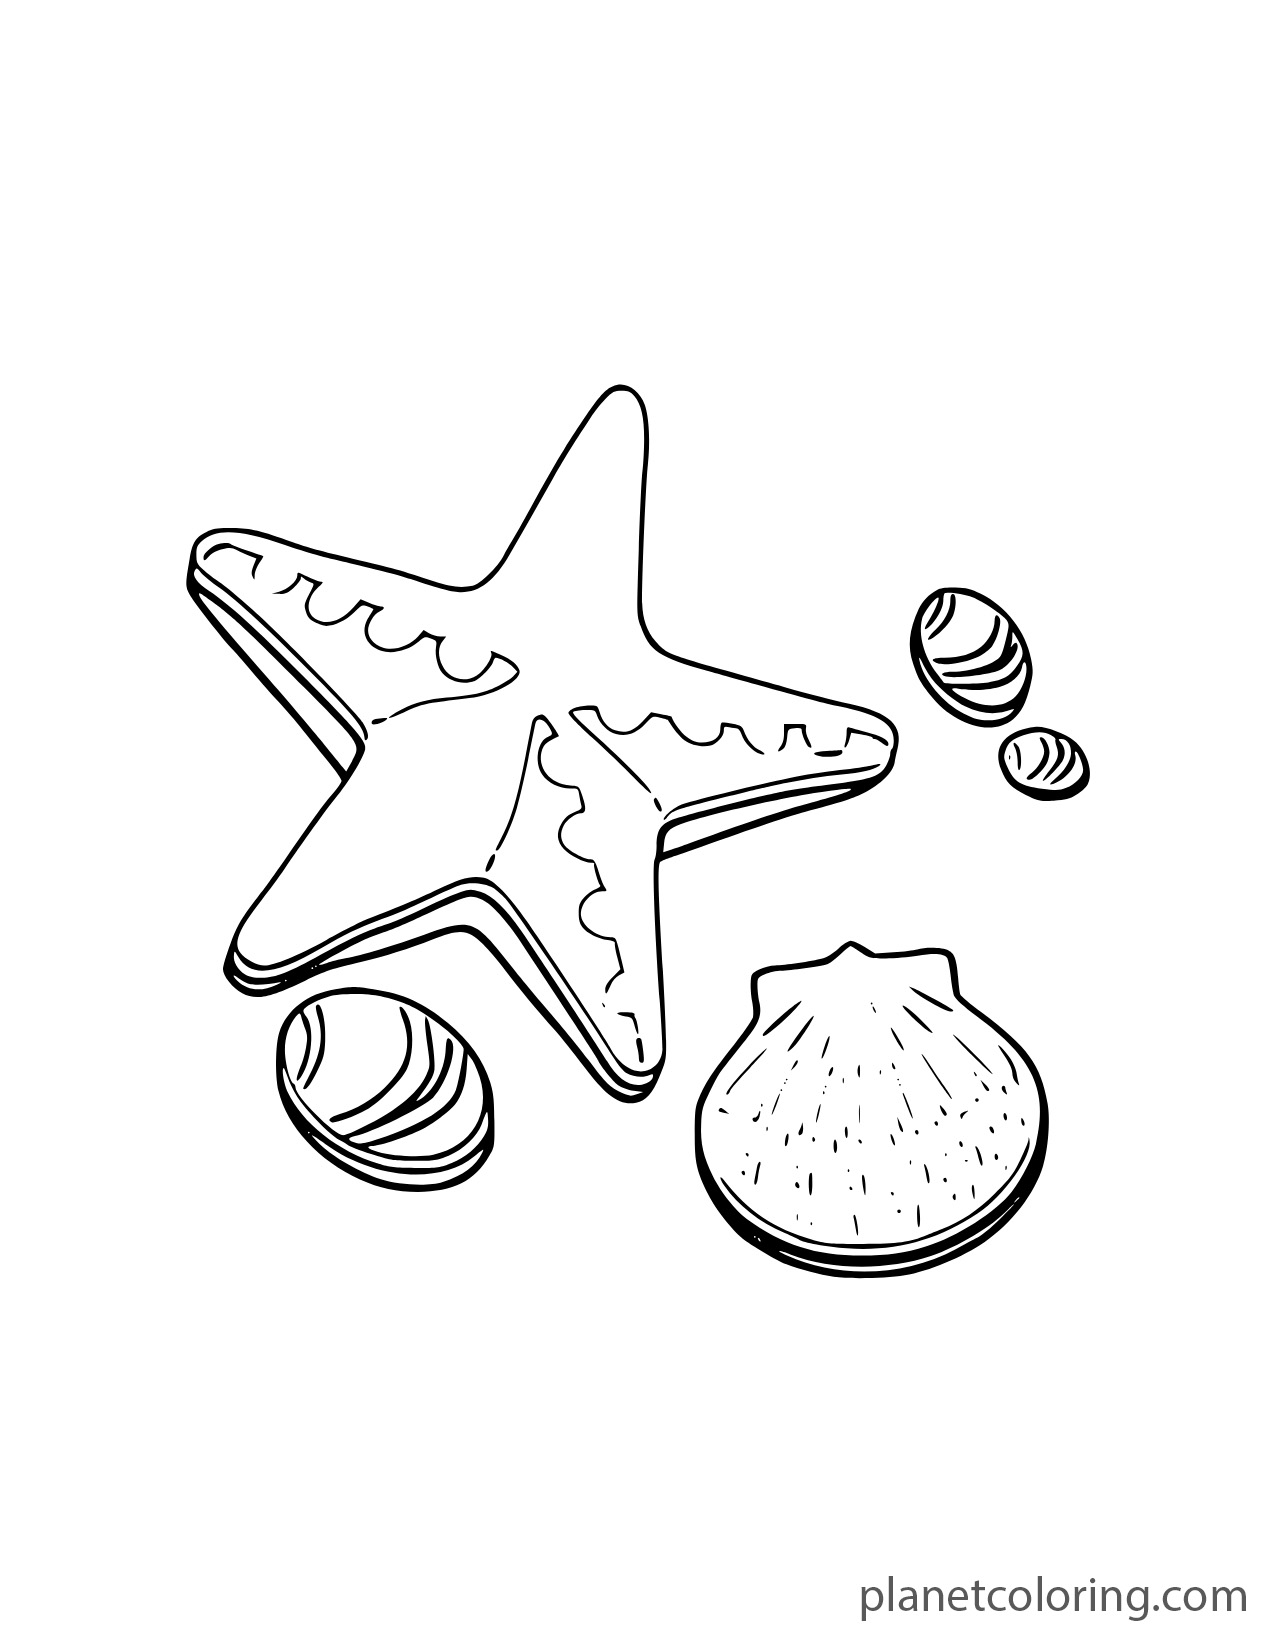 Starfish with seashells